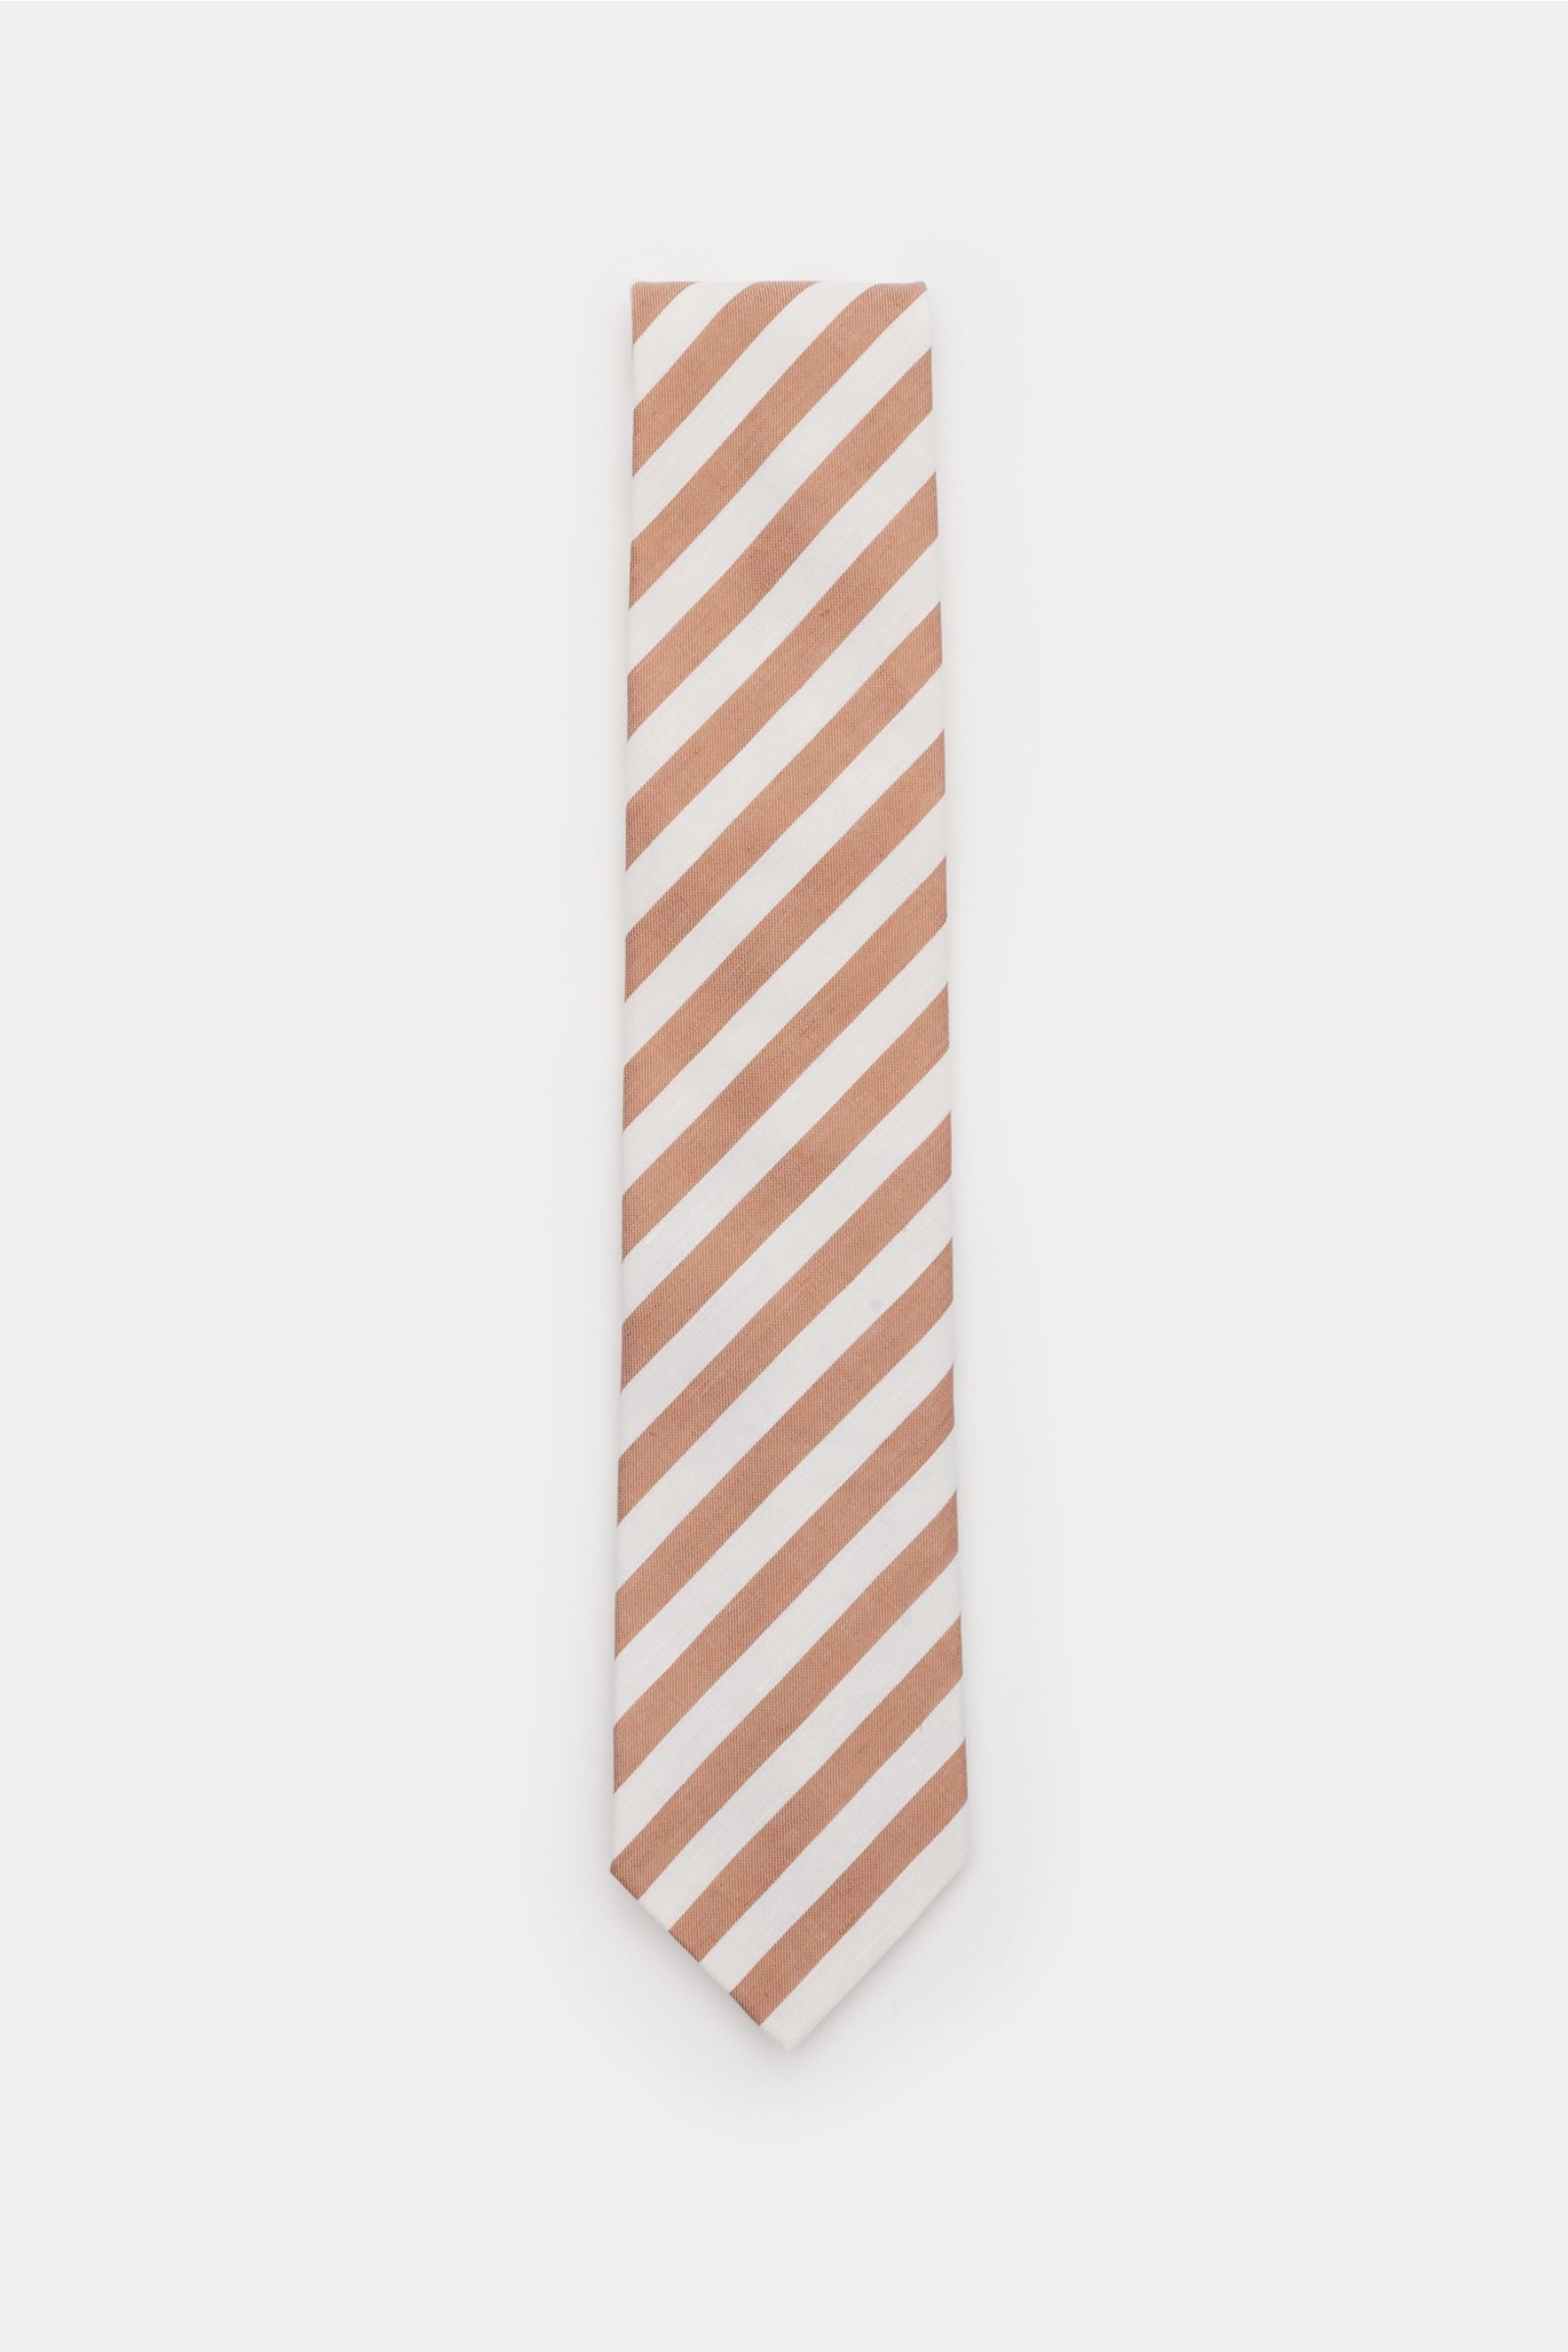 Krawatte hellbraun/offwhite gestreift